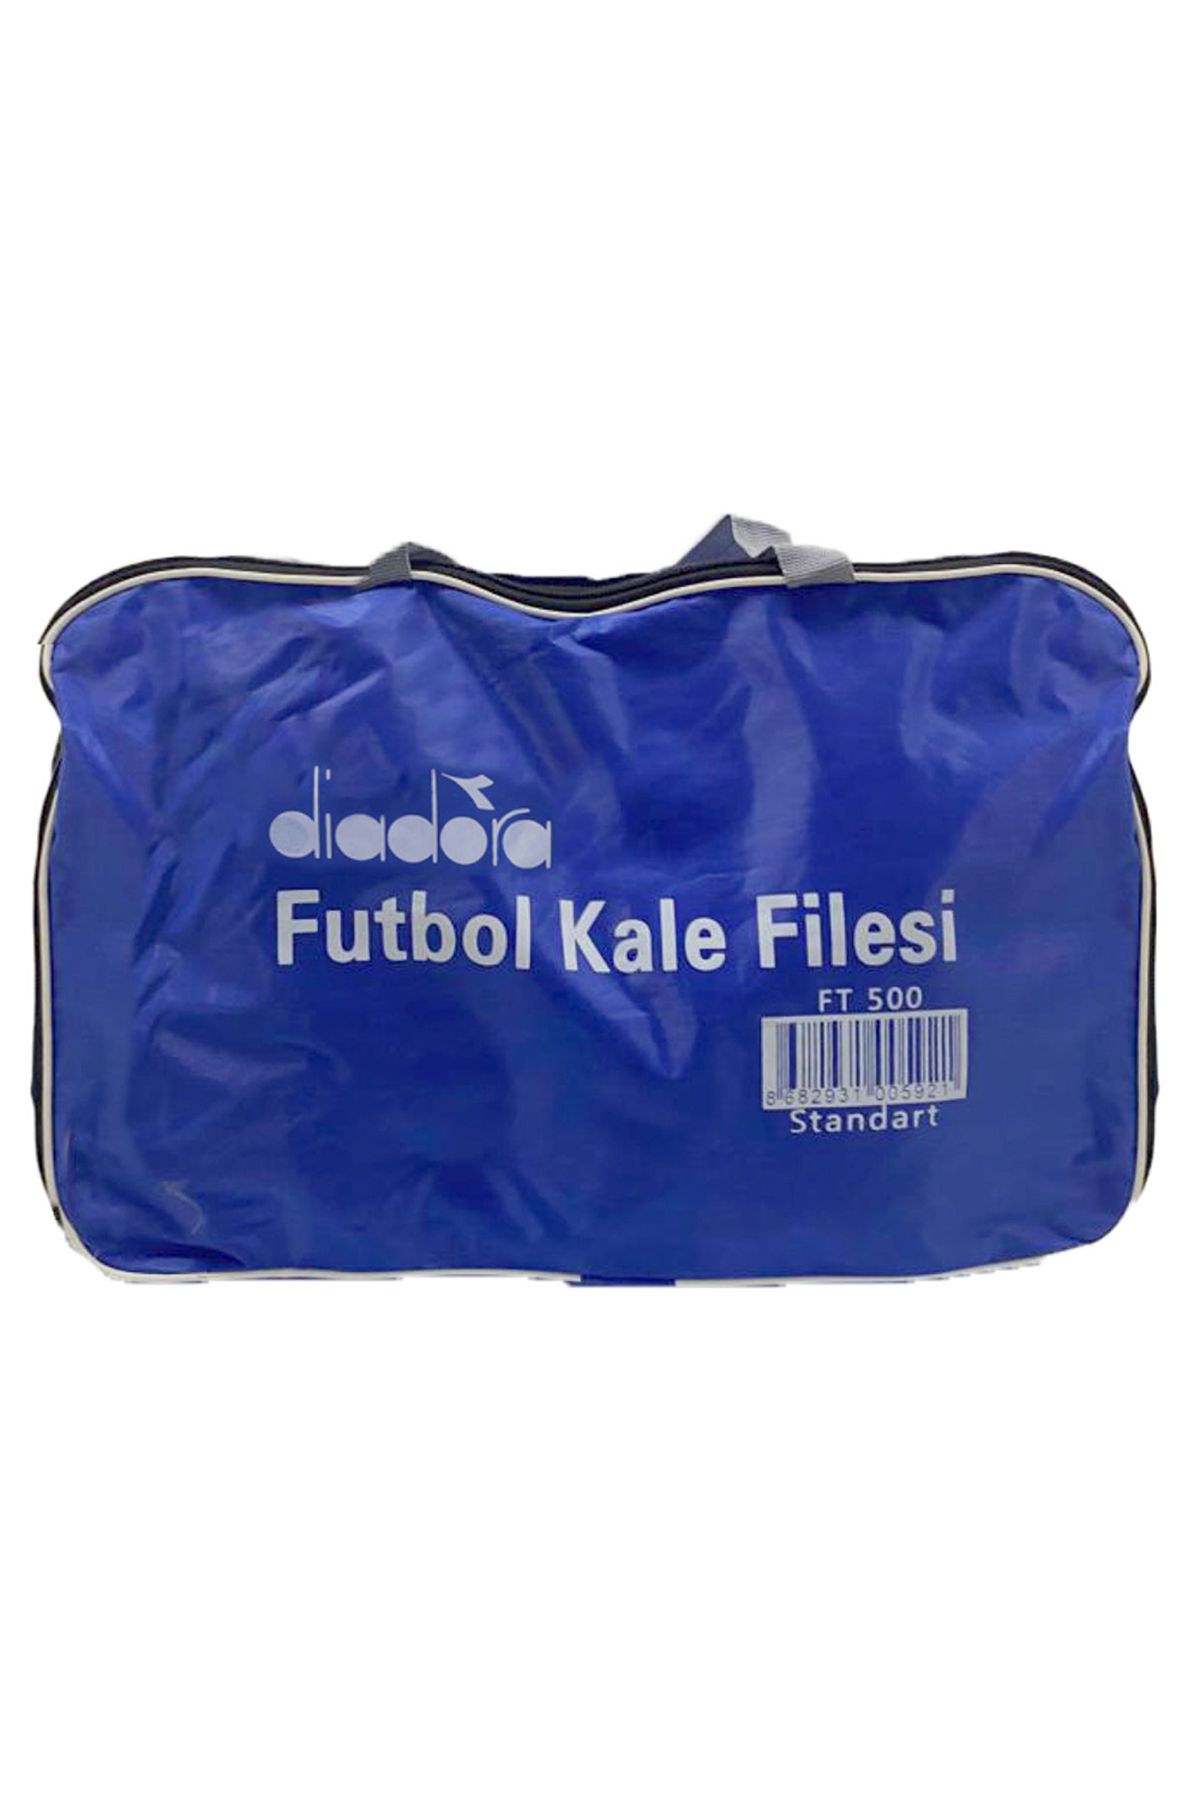 Diadora FT500 Nizami Futbol Kale Filesi